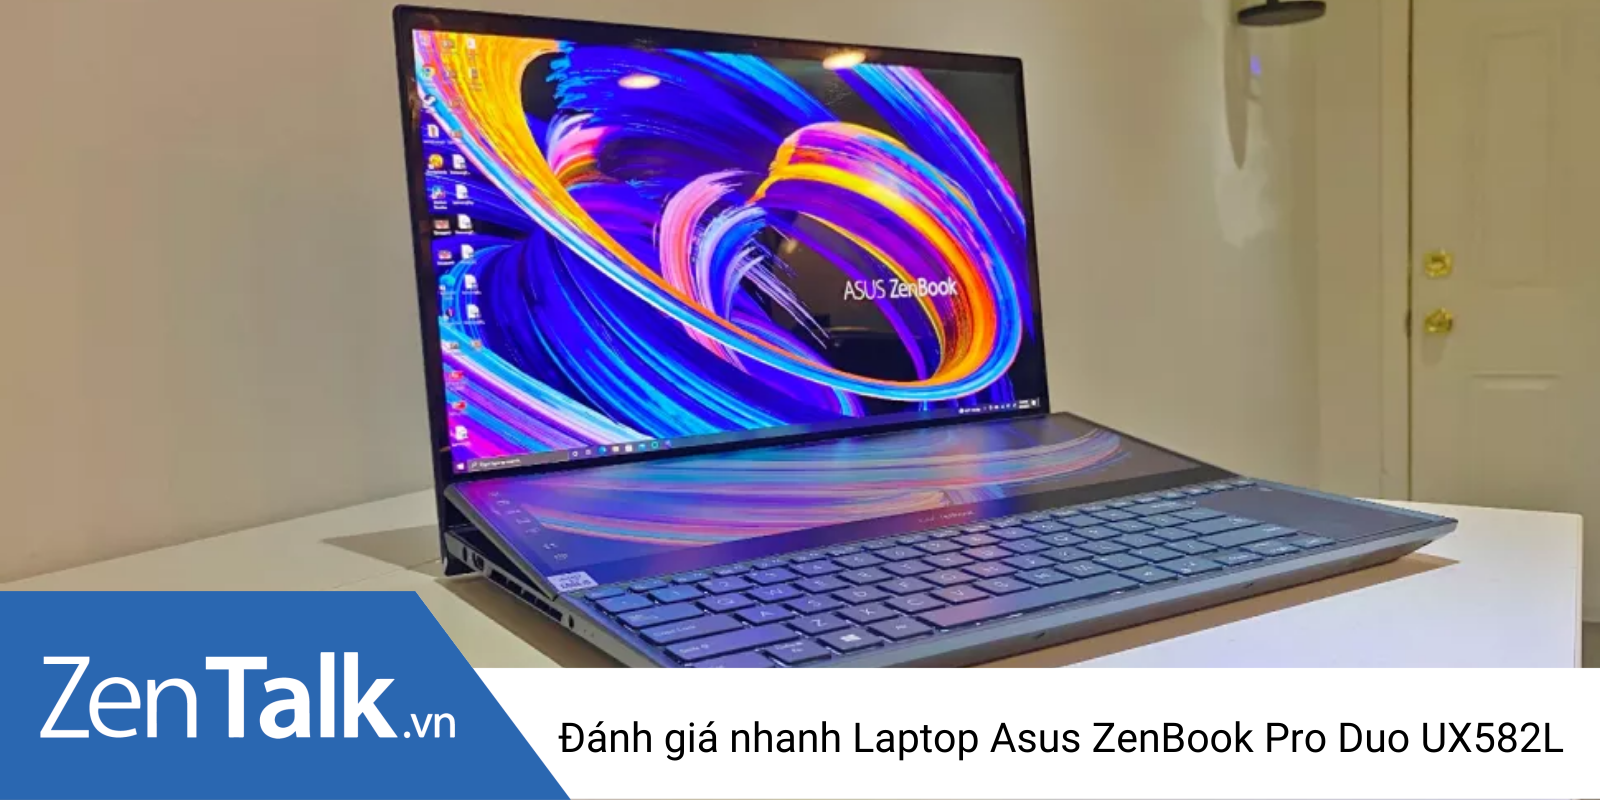 Đánh Giá Nhanh Laptop Asus Zenbook Pro Duo Ux582l Asus Community Zentalkvn 6080